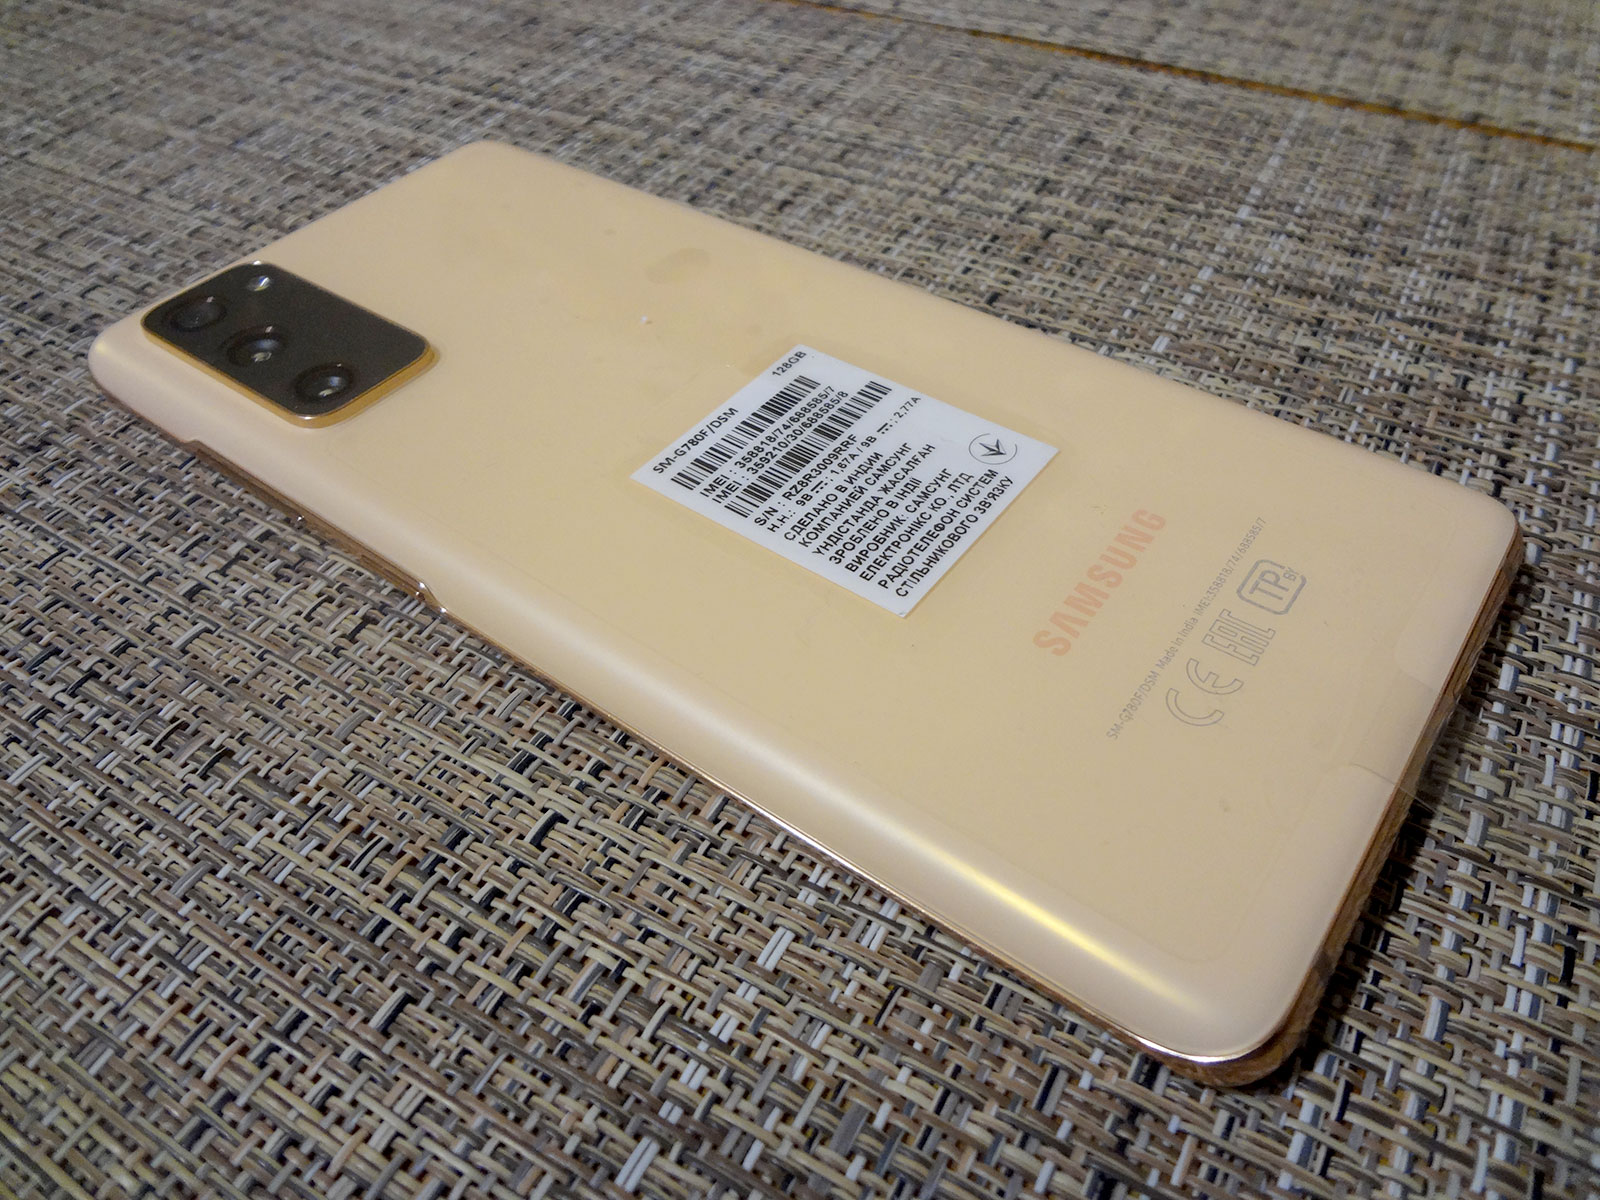 Samsung Galaxy S20 Fe 2023 Купить